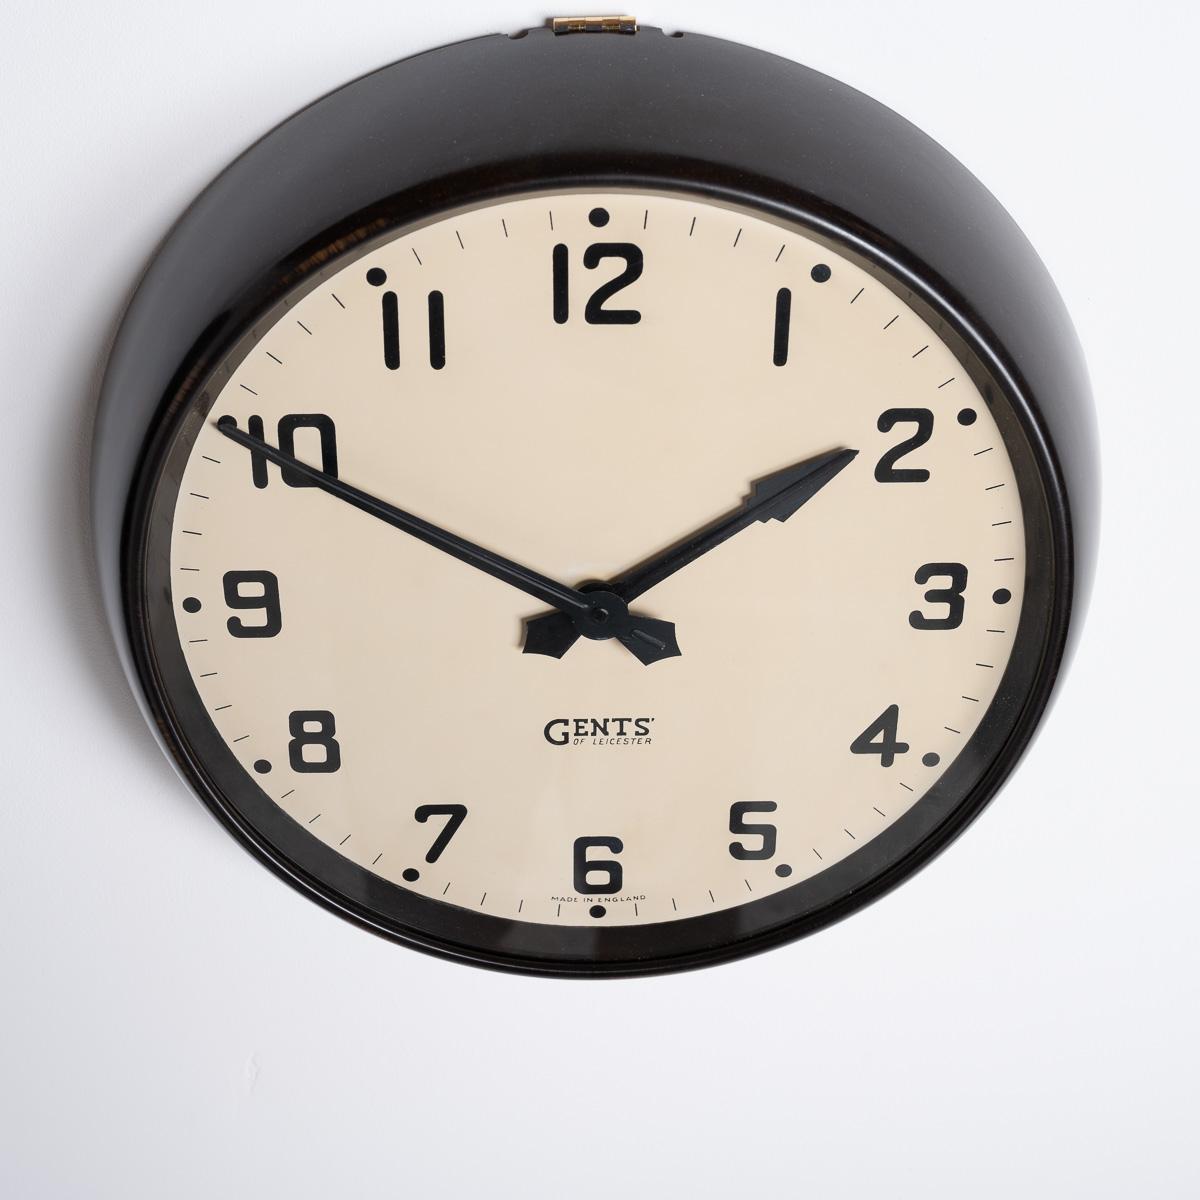 Reclaimed Large 14 Inch Diameter Bakelite Slave Clock By Gents Of Leicester 2